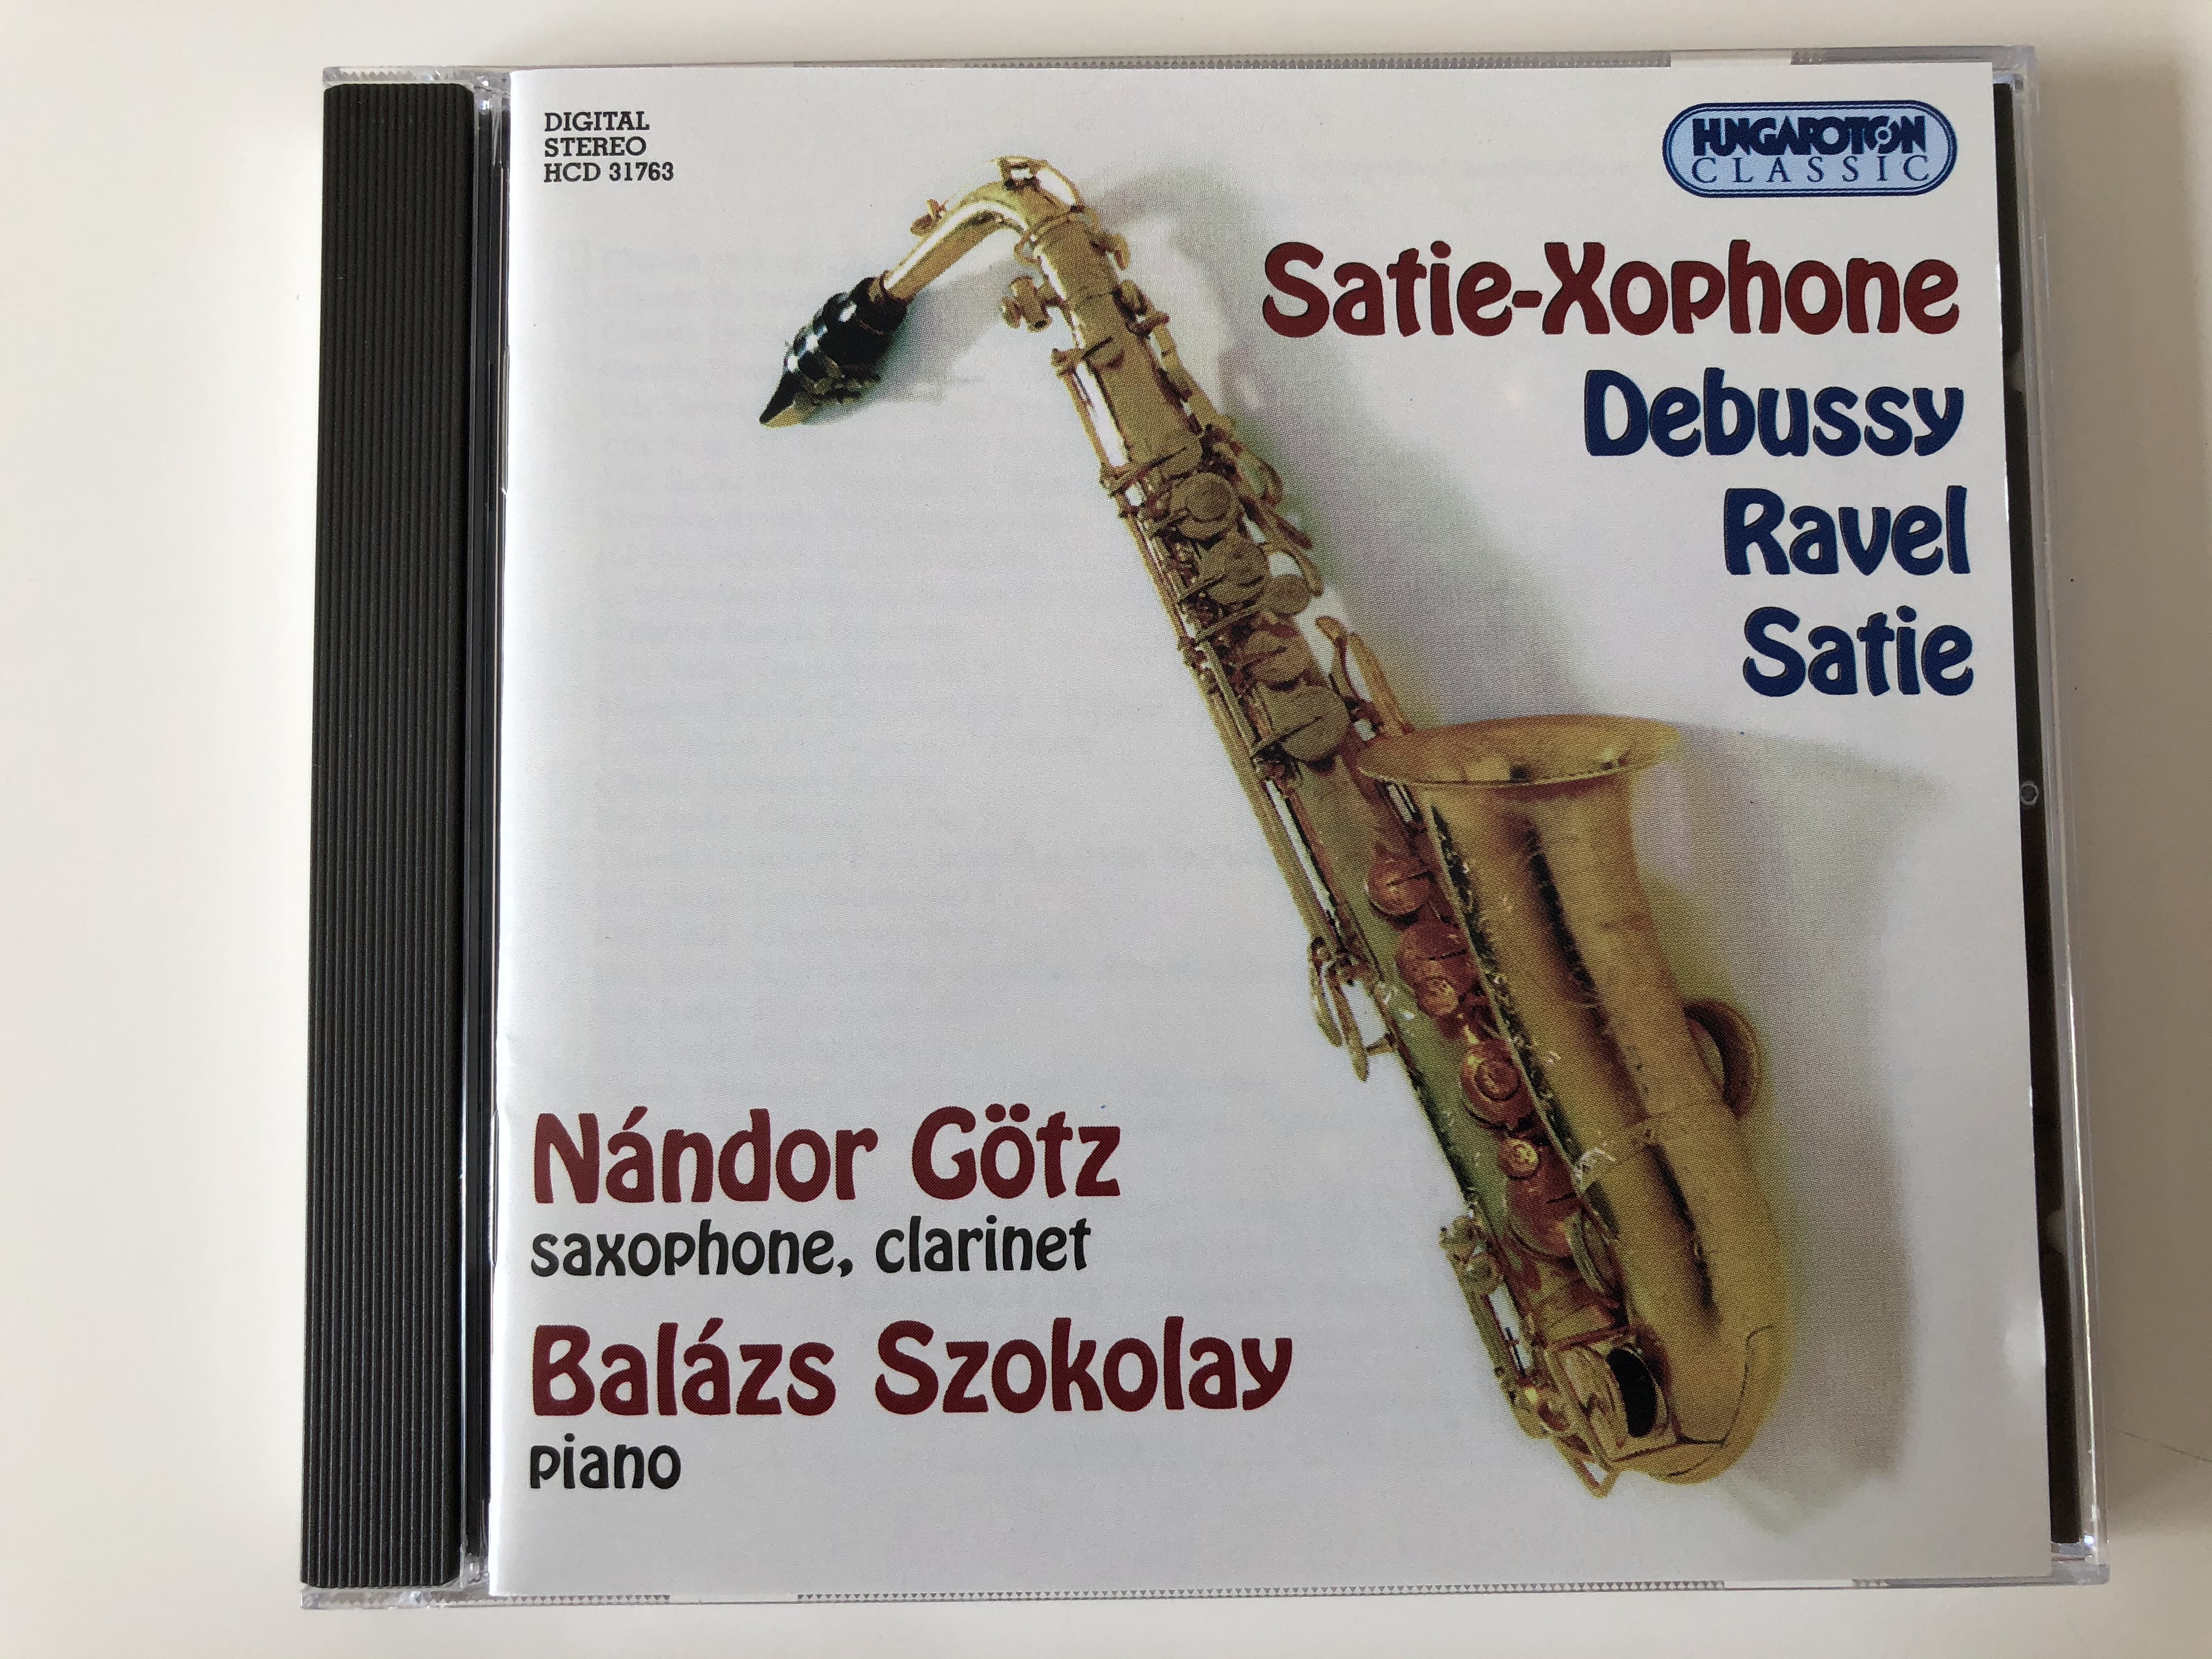 satie-xophone-debussy-ravel-satie-n-ndor-g-tz-saxophone-clarinet-bal-zs-szokolay-piano-hungaroton-classic-audio-cd-1998-stereo-hcd-31763-1-.jpg